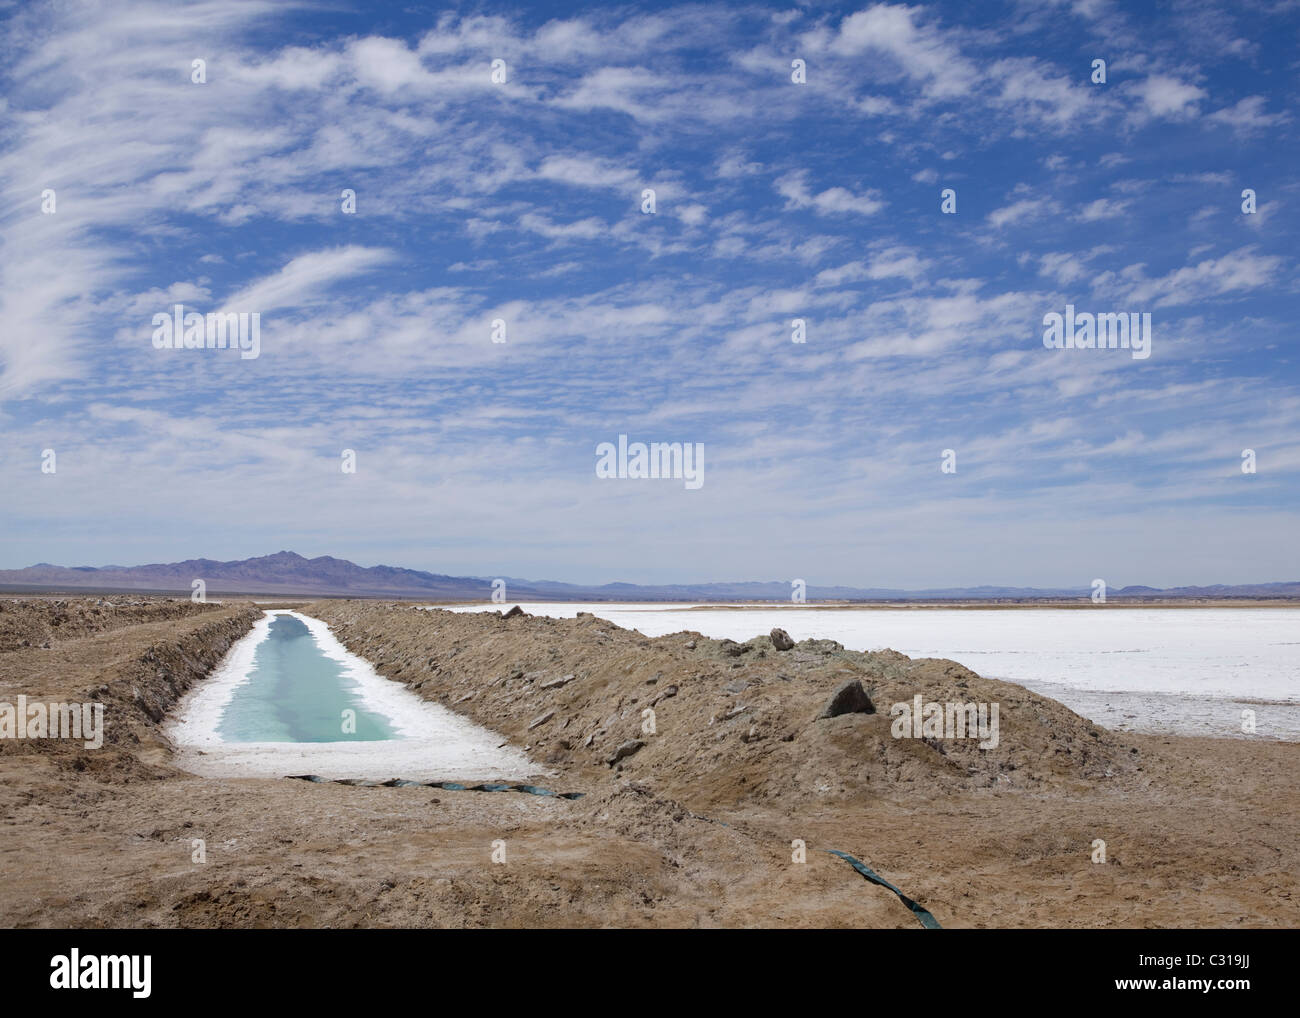 Rock salt evaporation flats - Amboy, California USA Stock Photo